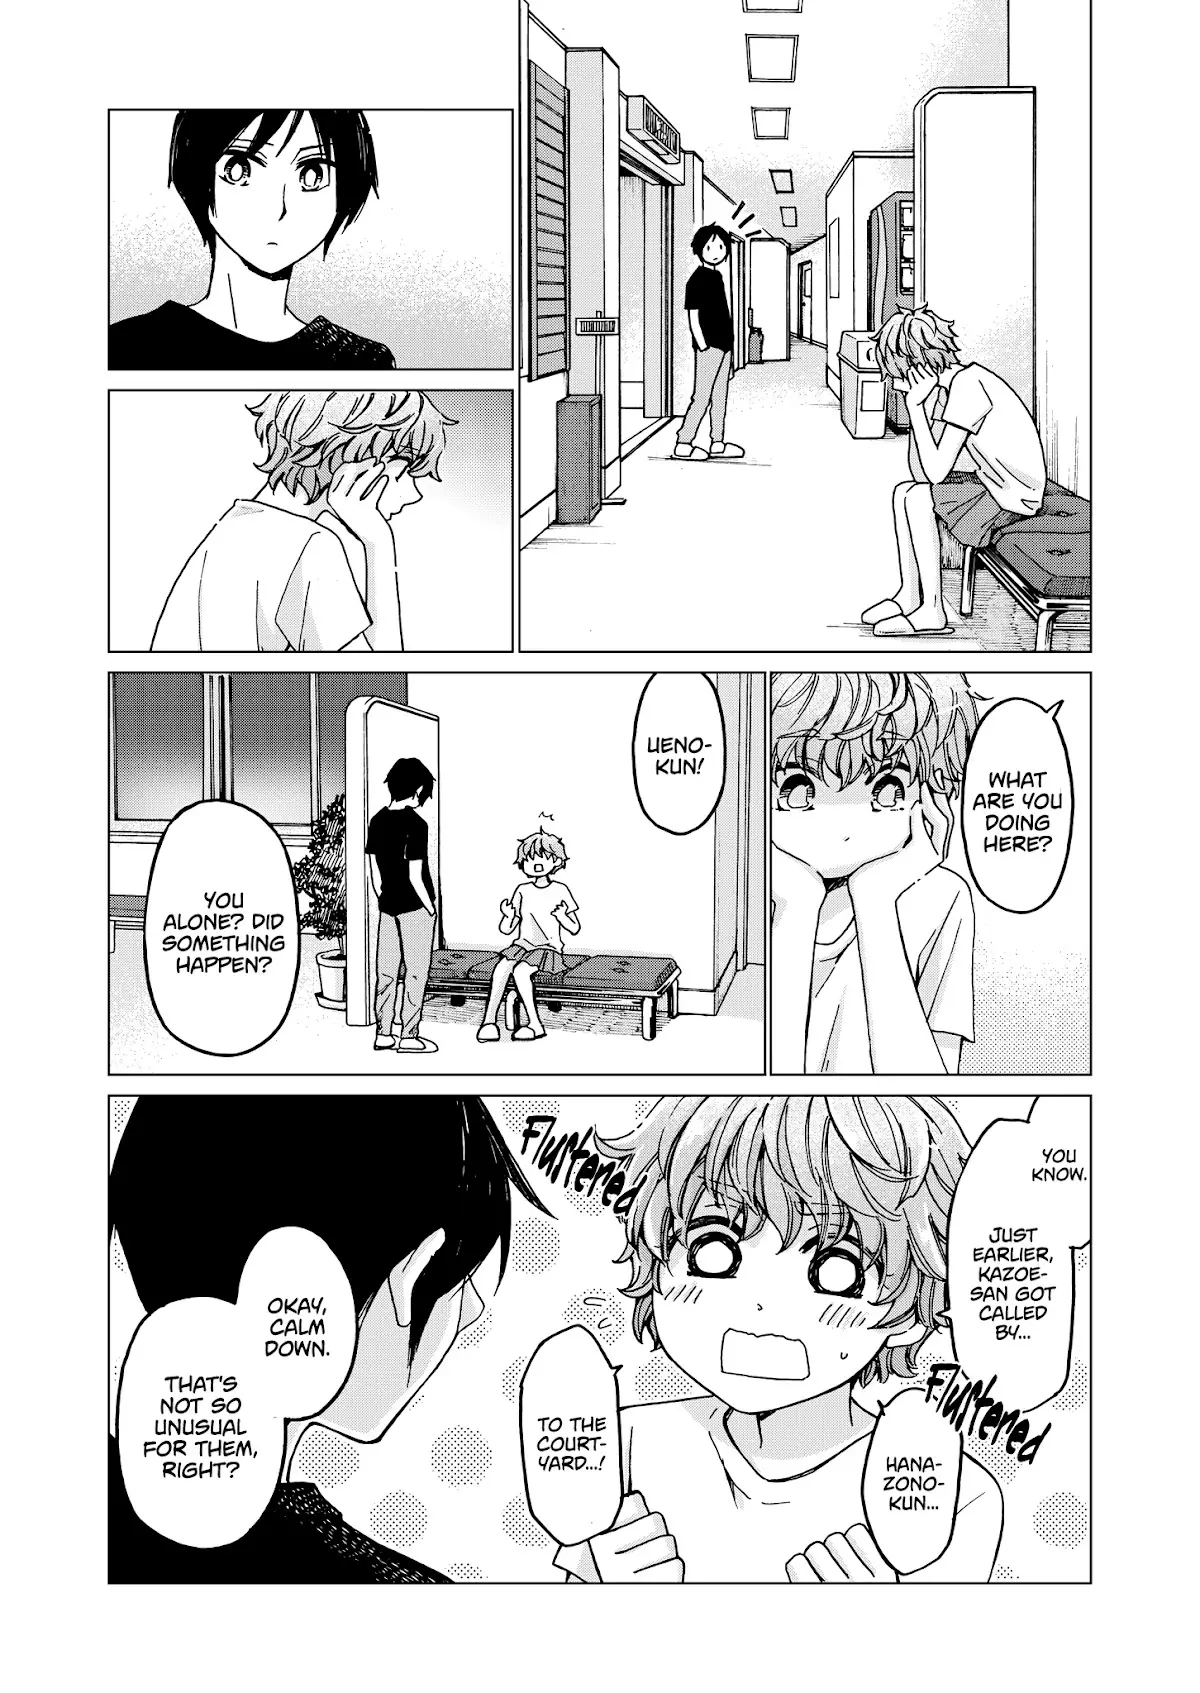 Hanazono And Kazoe's Bizzare After School Rendezvous - 32 page 4-34f4ea70